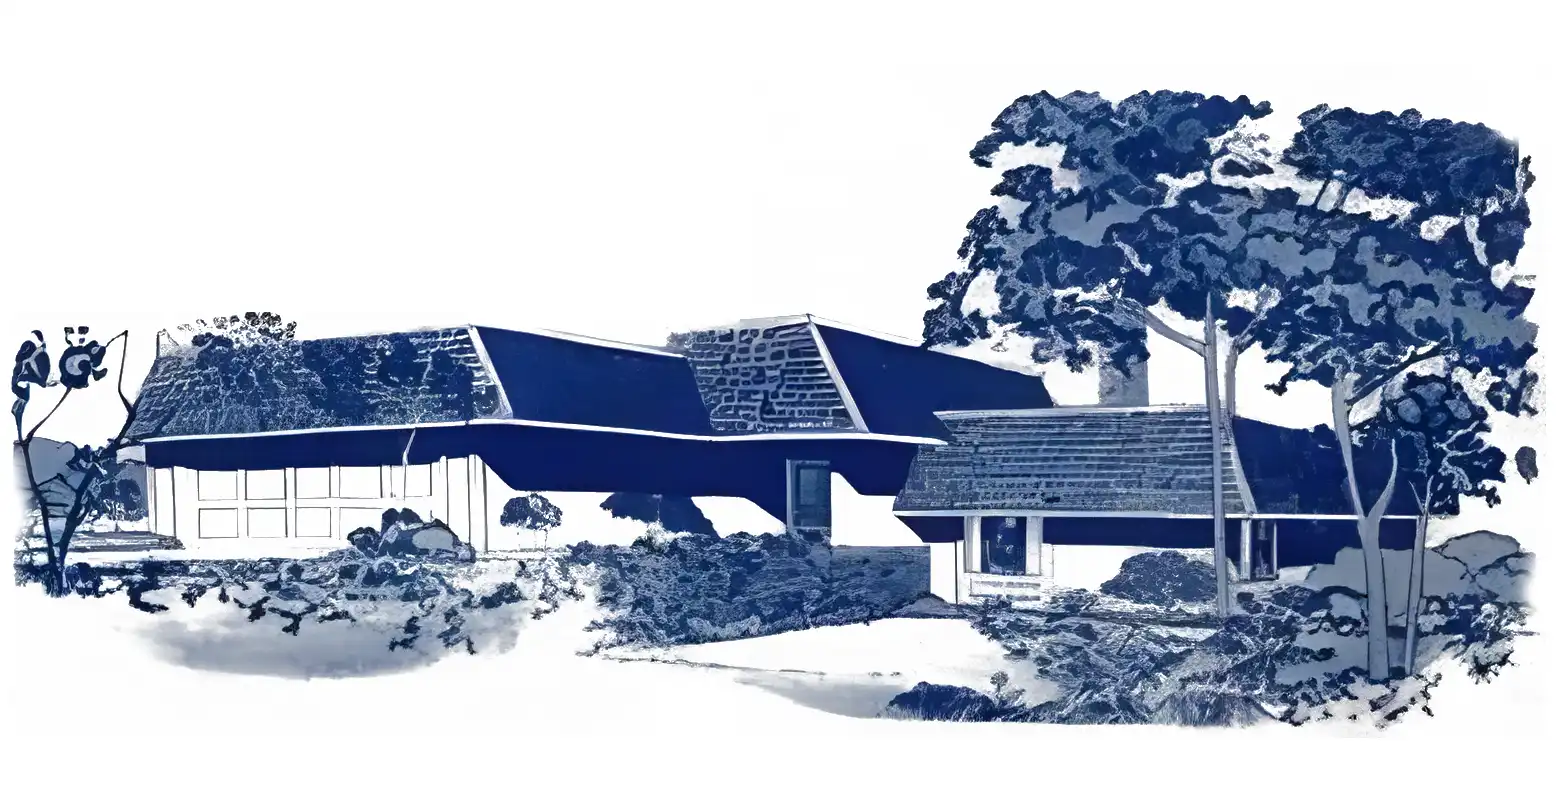 Monochrome rendering of 1960s split level ranch style house, variant mansard roofs.